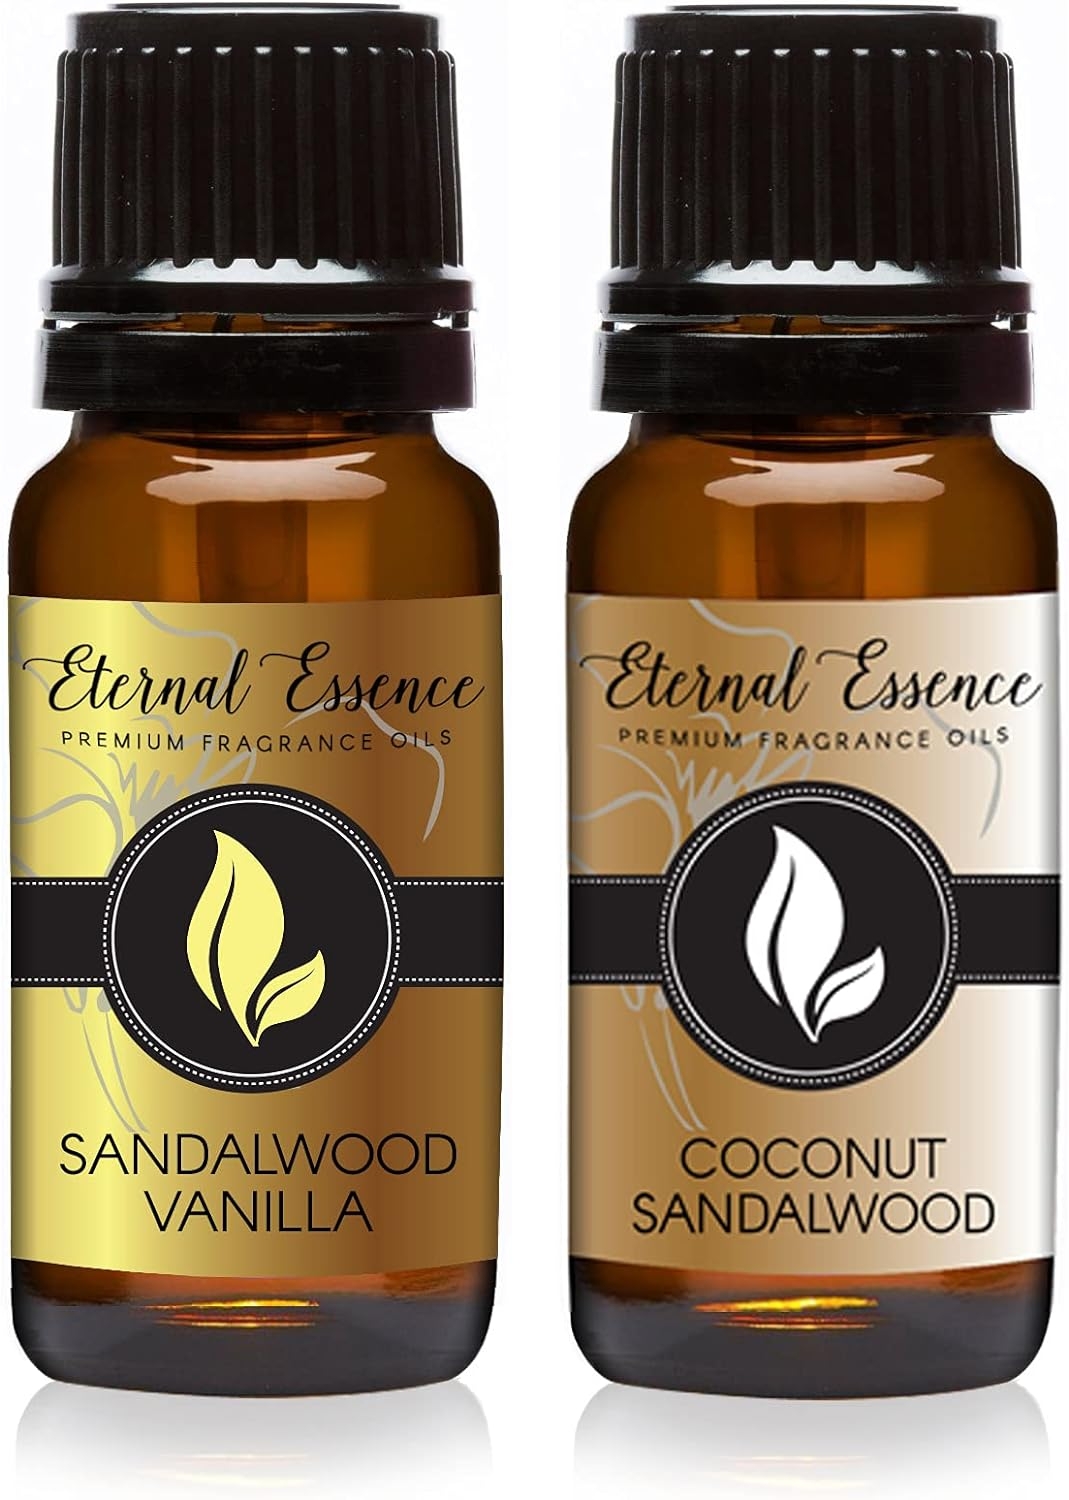 Sandalwood Vanilla & Coconut Sandalwood